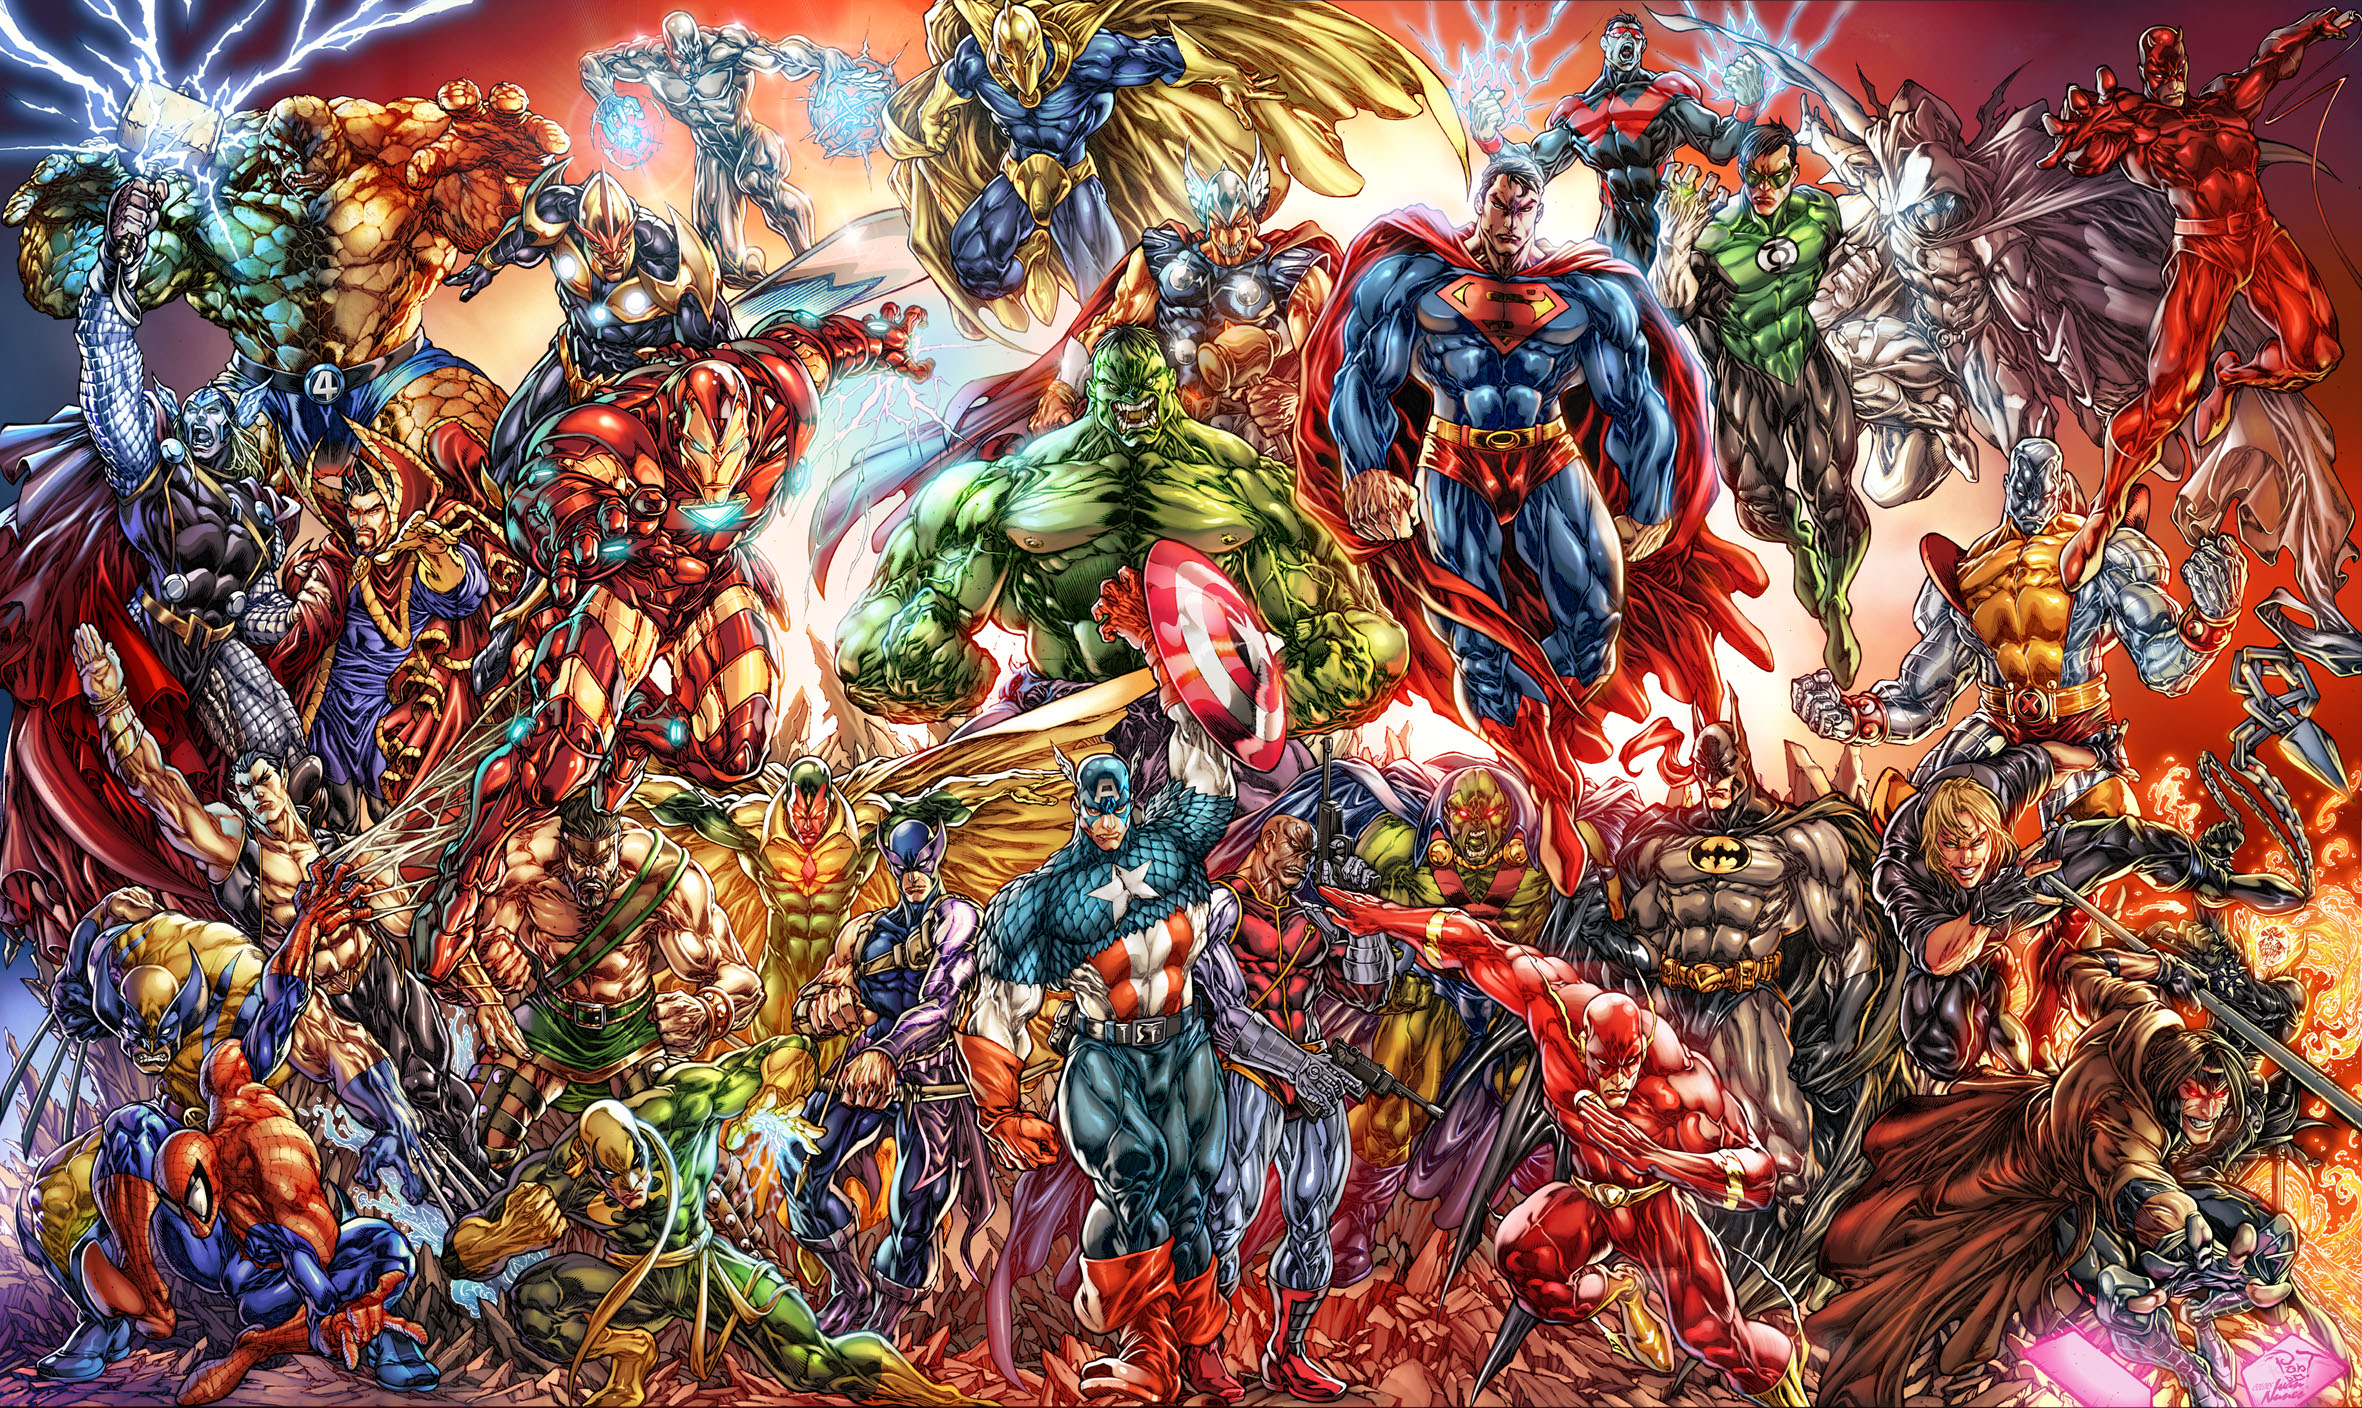 hal jordan, superman, martian manhunter, batman, spider man, daredevil, dc comics, hulk, comics, collage, barry allen, wolverine, ghost rider, ben grimm, beta ray bill, captain america, clint barton, colossus, danny rand, deathlok, doctor fate (dc comics), doctor strange, flash, gambit (marvel comics), green lantern, hawkeye, hercules (marvel comics), iron fist (marvel comics), iron man, j'onn j'onzz, longshot (marvel comics), moon knight, namor the sub mariner, nightwing, nova (marvel comics), peter parker, silver surfer, sub mariner, thing (marvel comics), thor, vision (marvel comics), wonder man